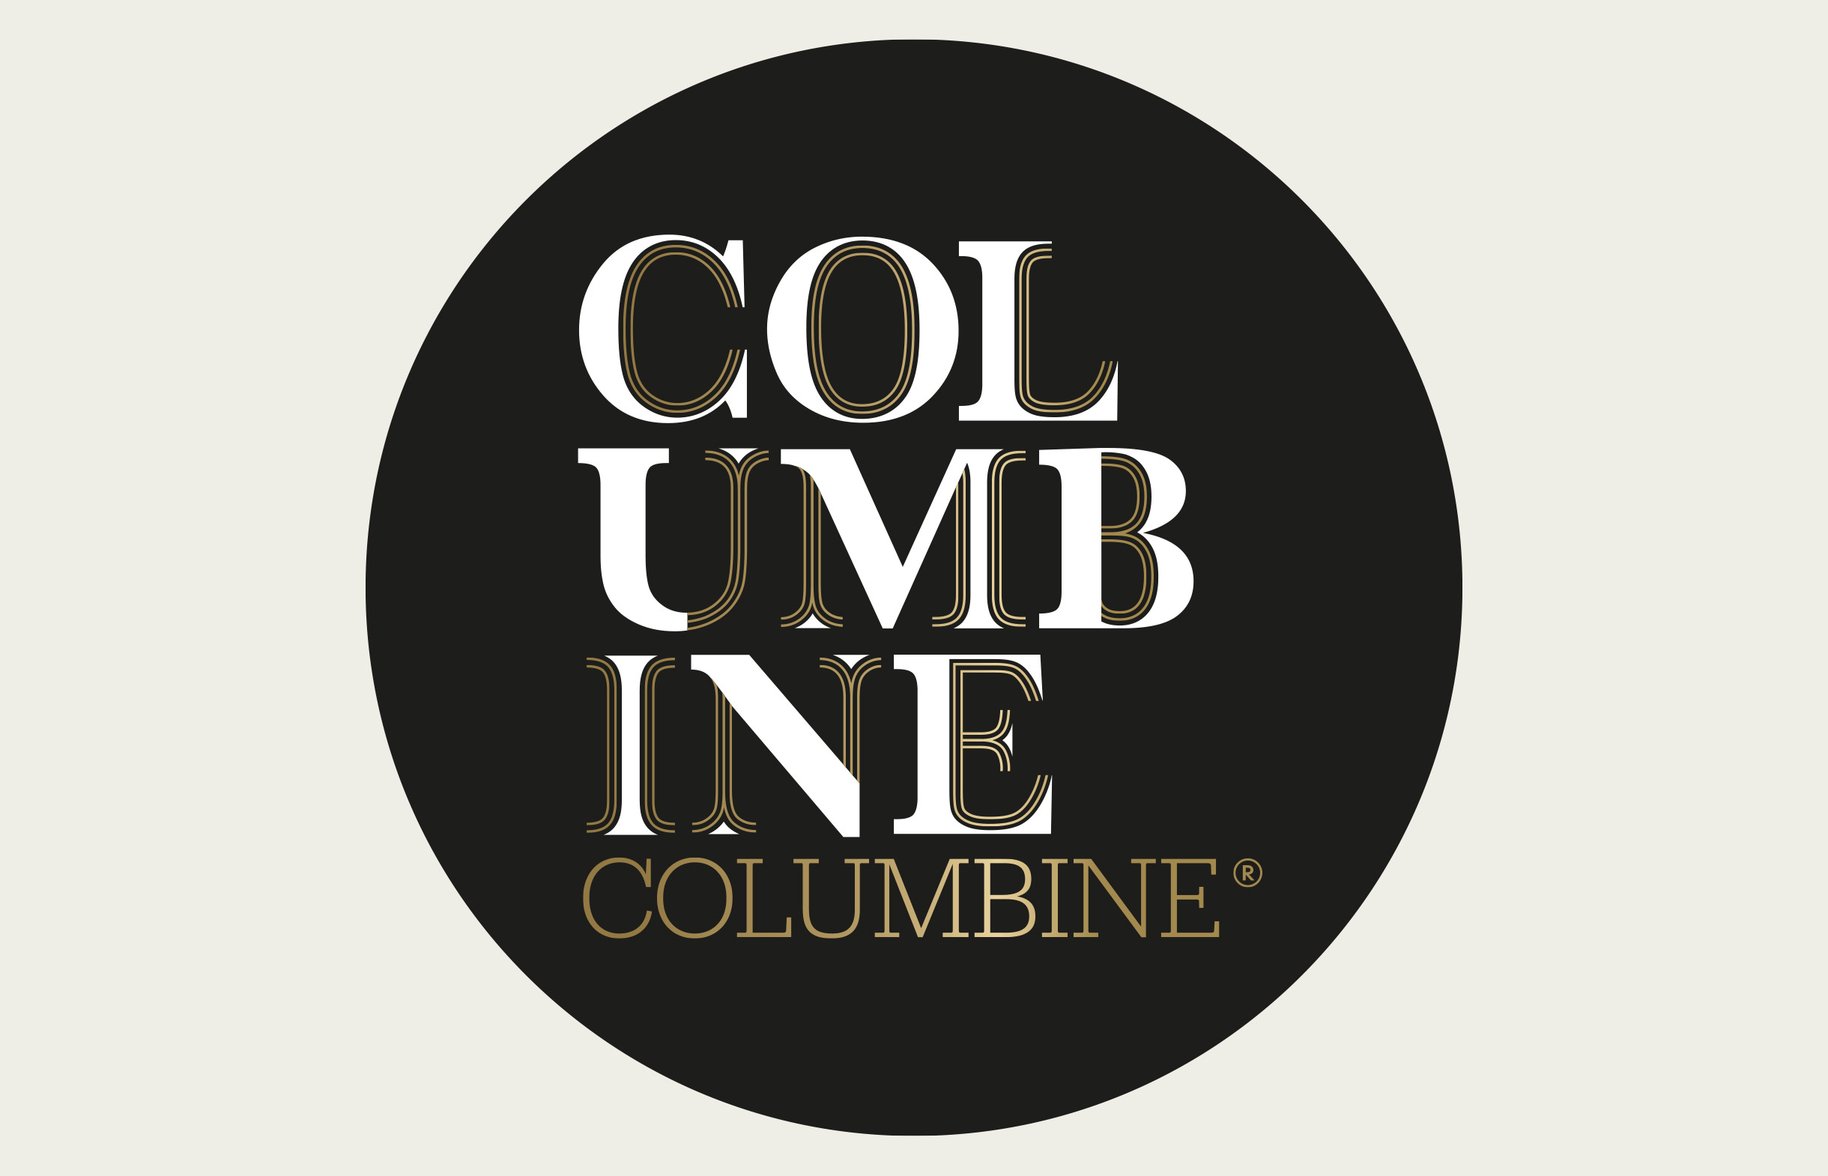 Columbine logo graphic